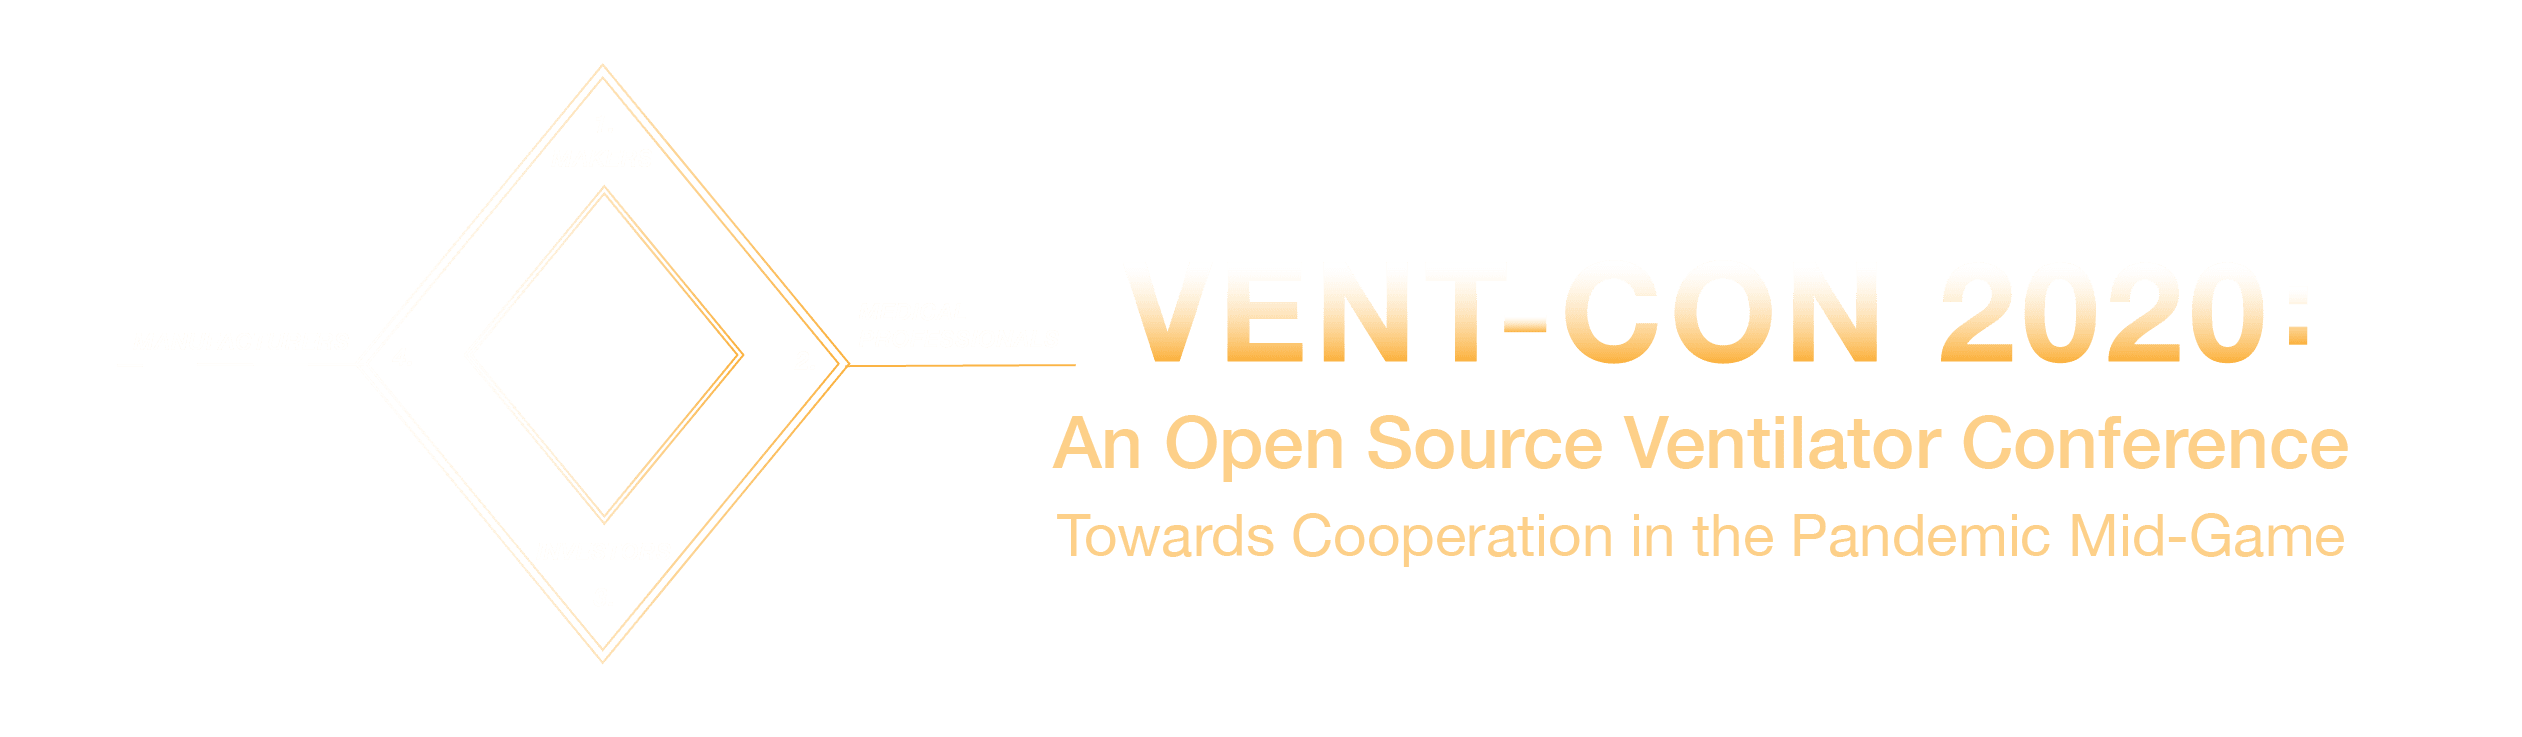 Vent-con2020_logo_update-01